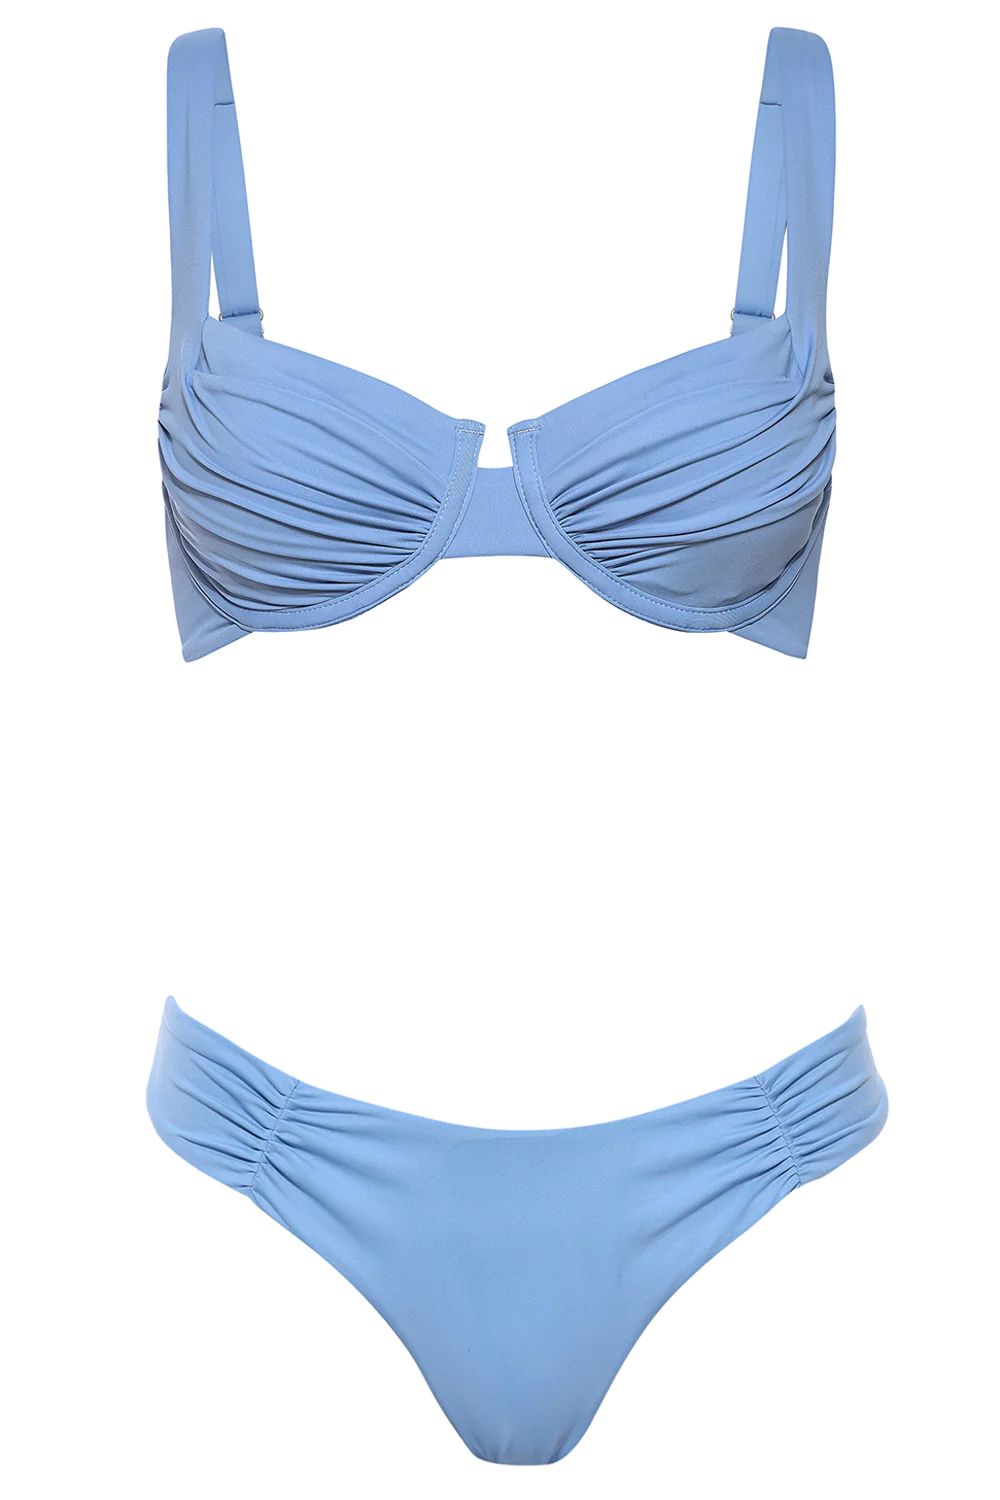 Aruba Bikini Baby Blue Set | VETCHY